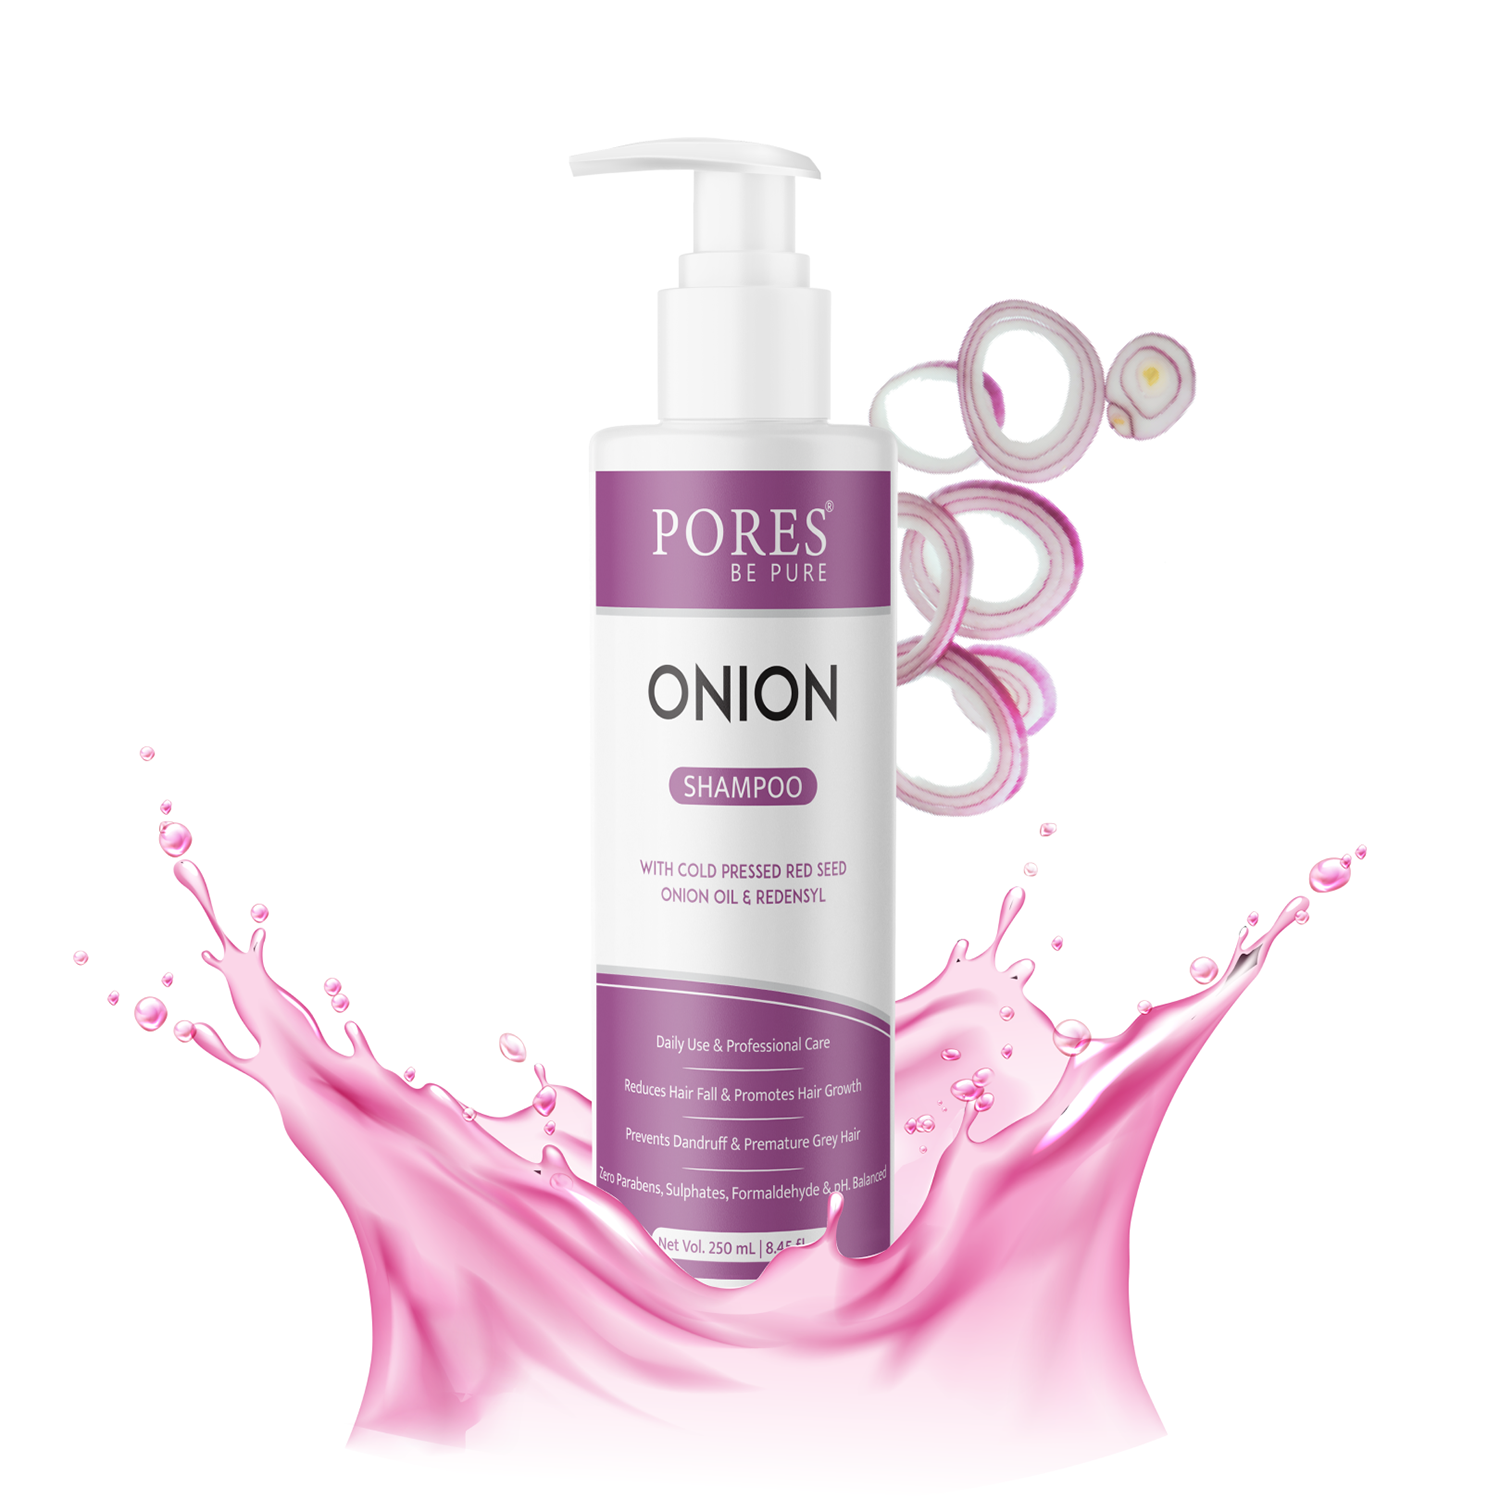 Onion Shampoo by PORES BE PURE